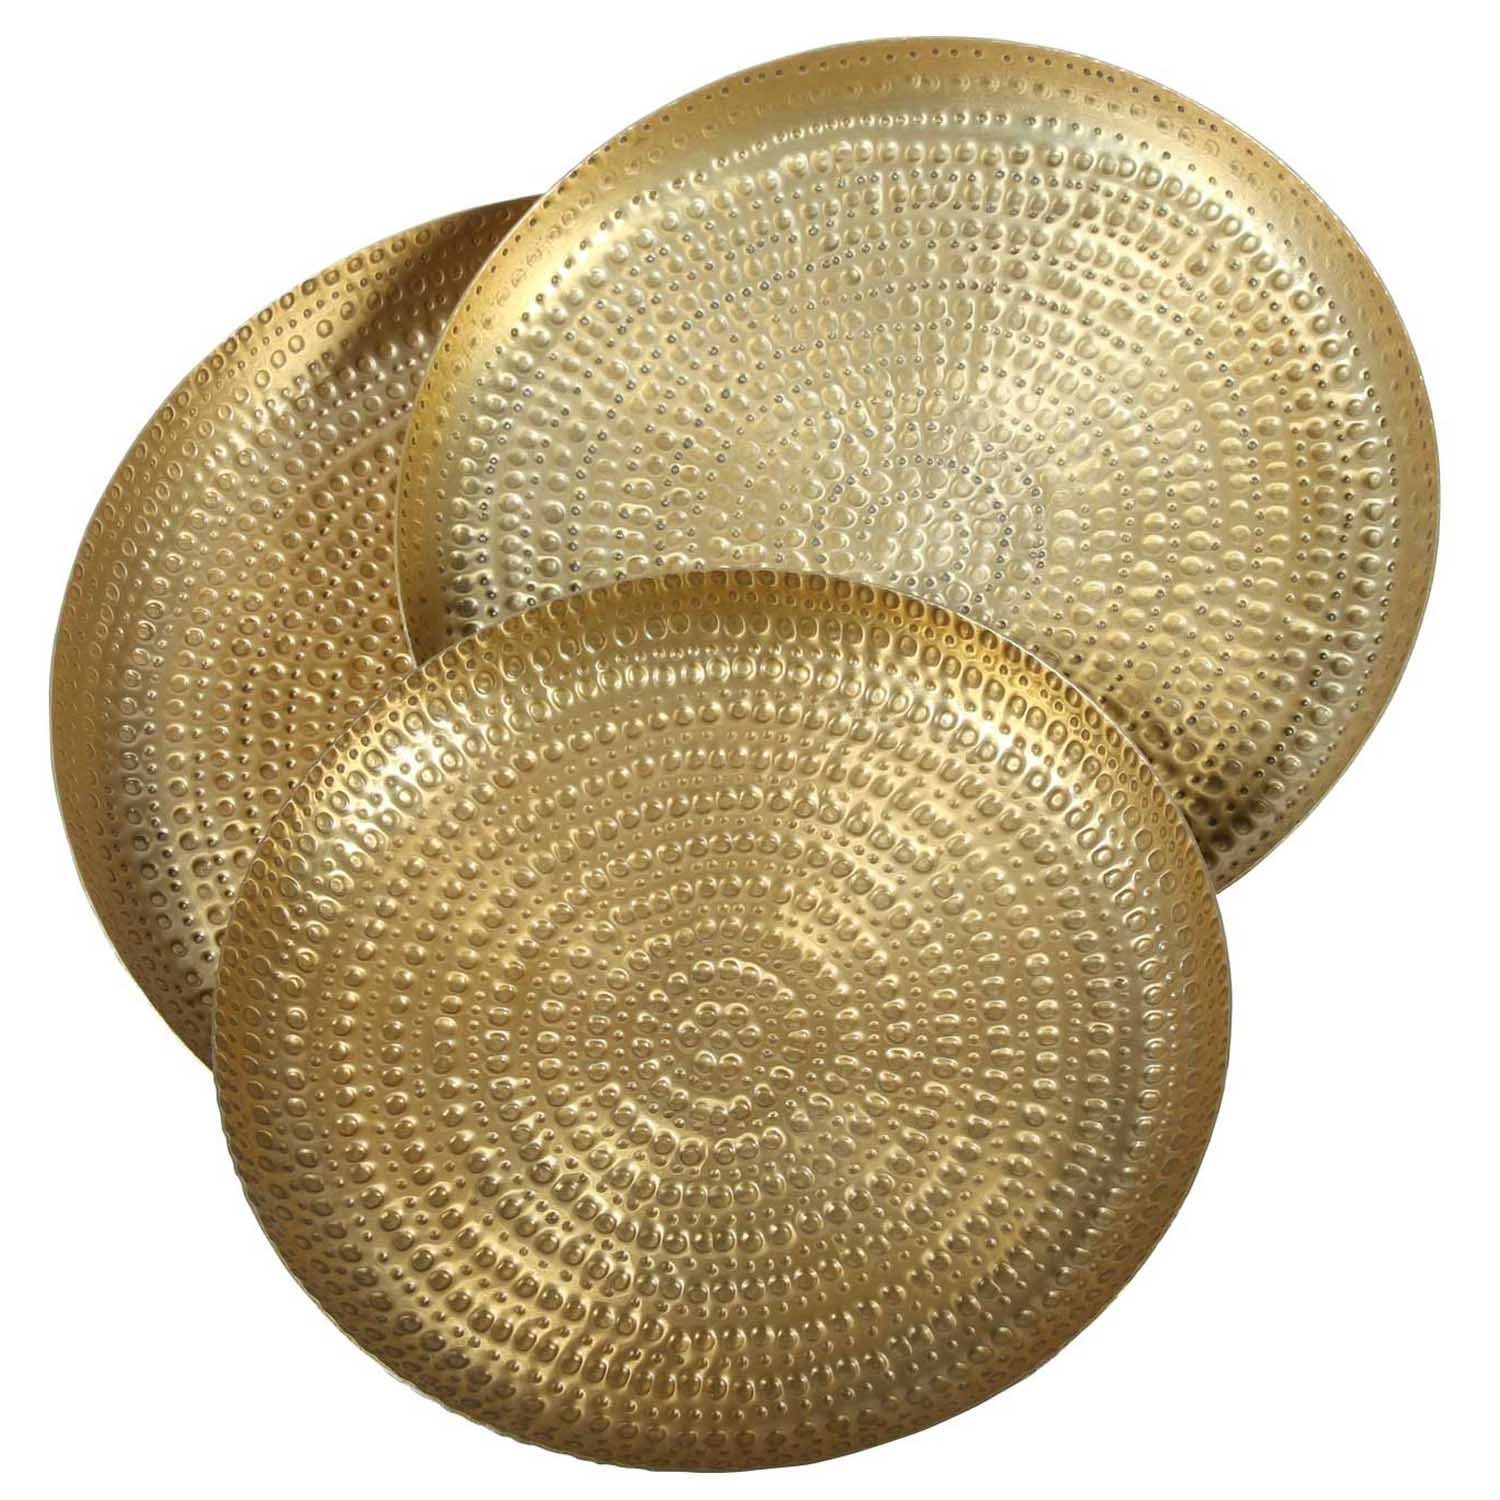 Casa Moro Tablett Teetablett Zana gehämmert Kunsthandwerk aus dem Orient, Aluminium, (3-tlg., 3 verschiedene Grössen), Rundes Serviertabletts Gold